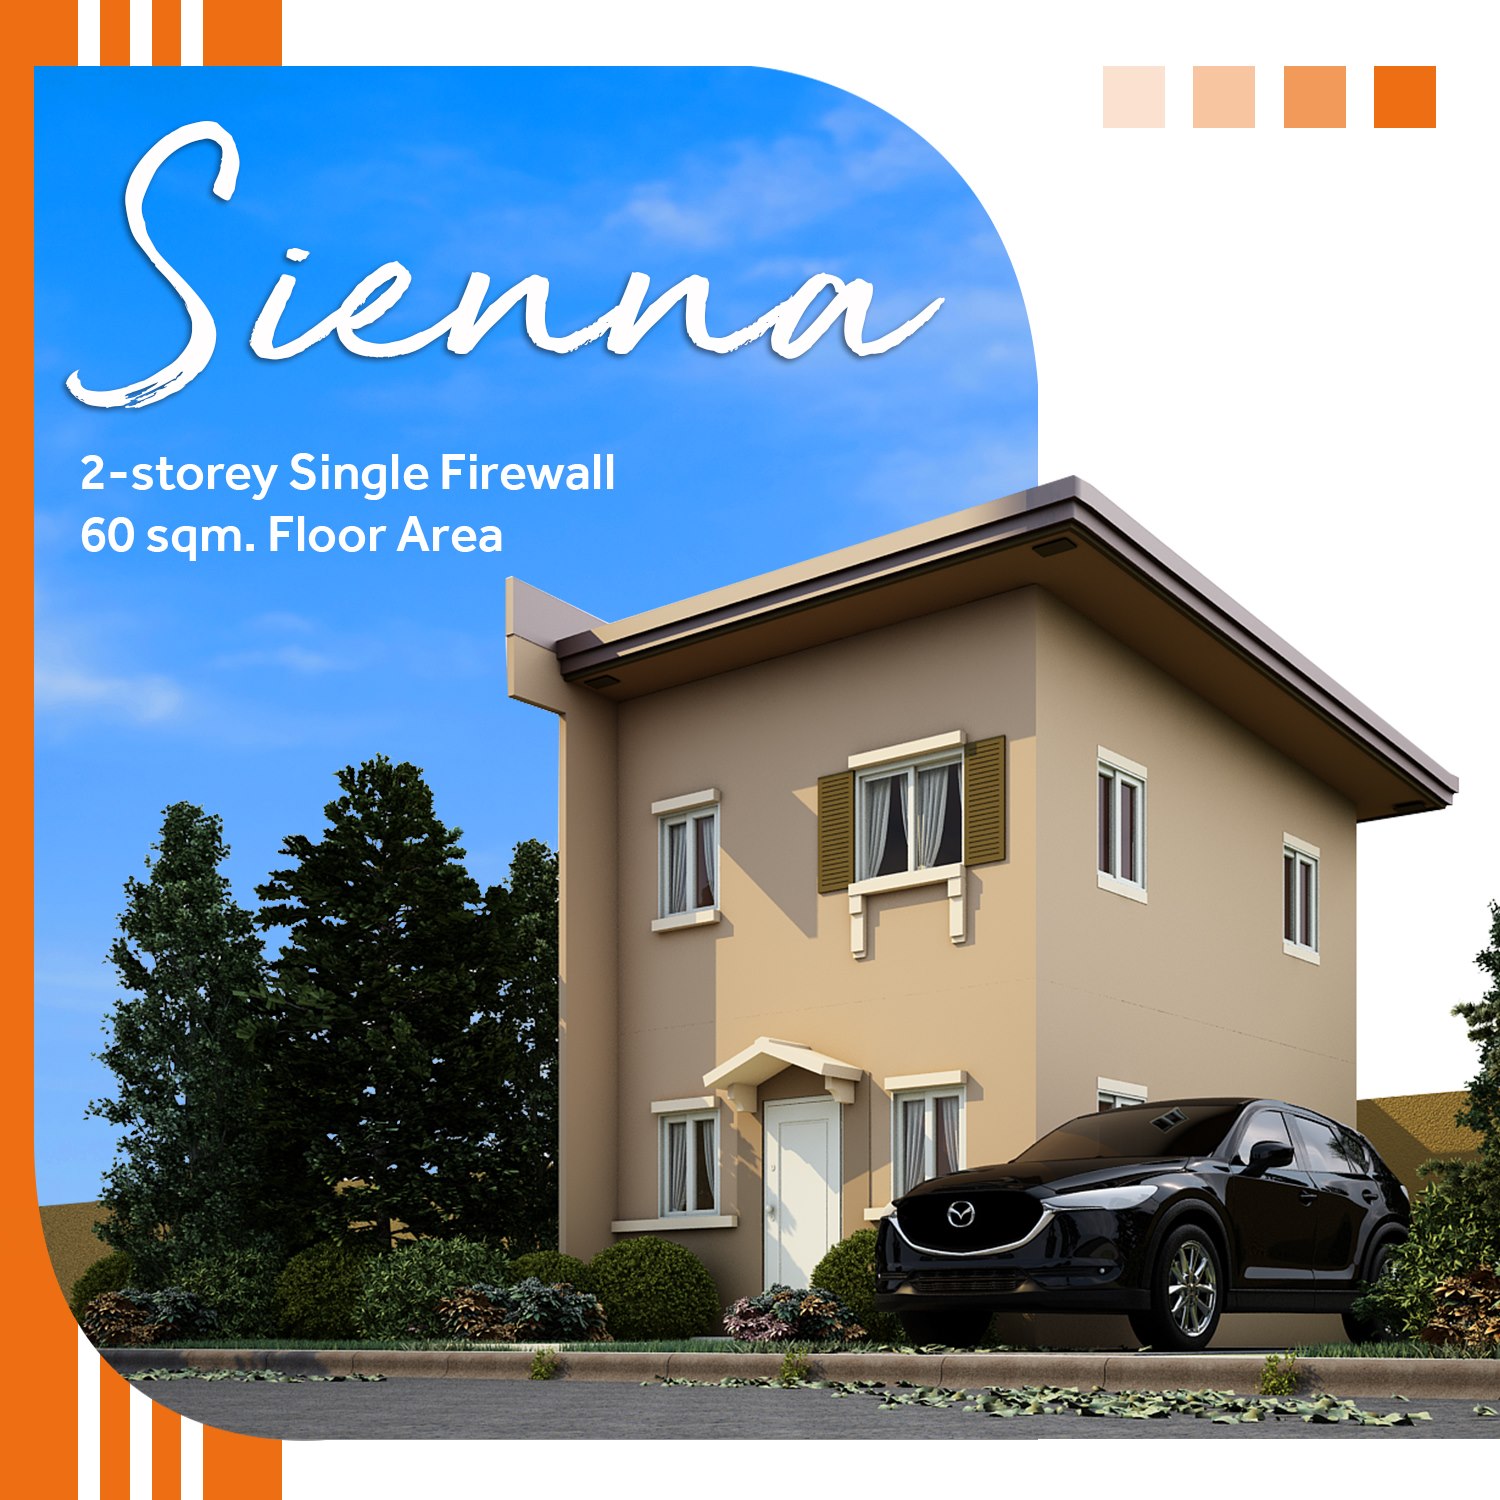 Affordable House and Lot in Santa Rosa Nueva Ecija – Sienna Unit